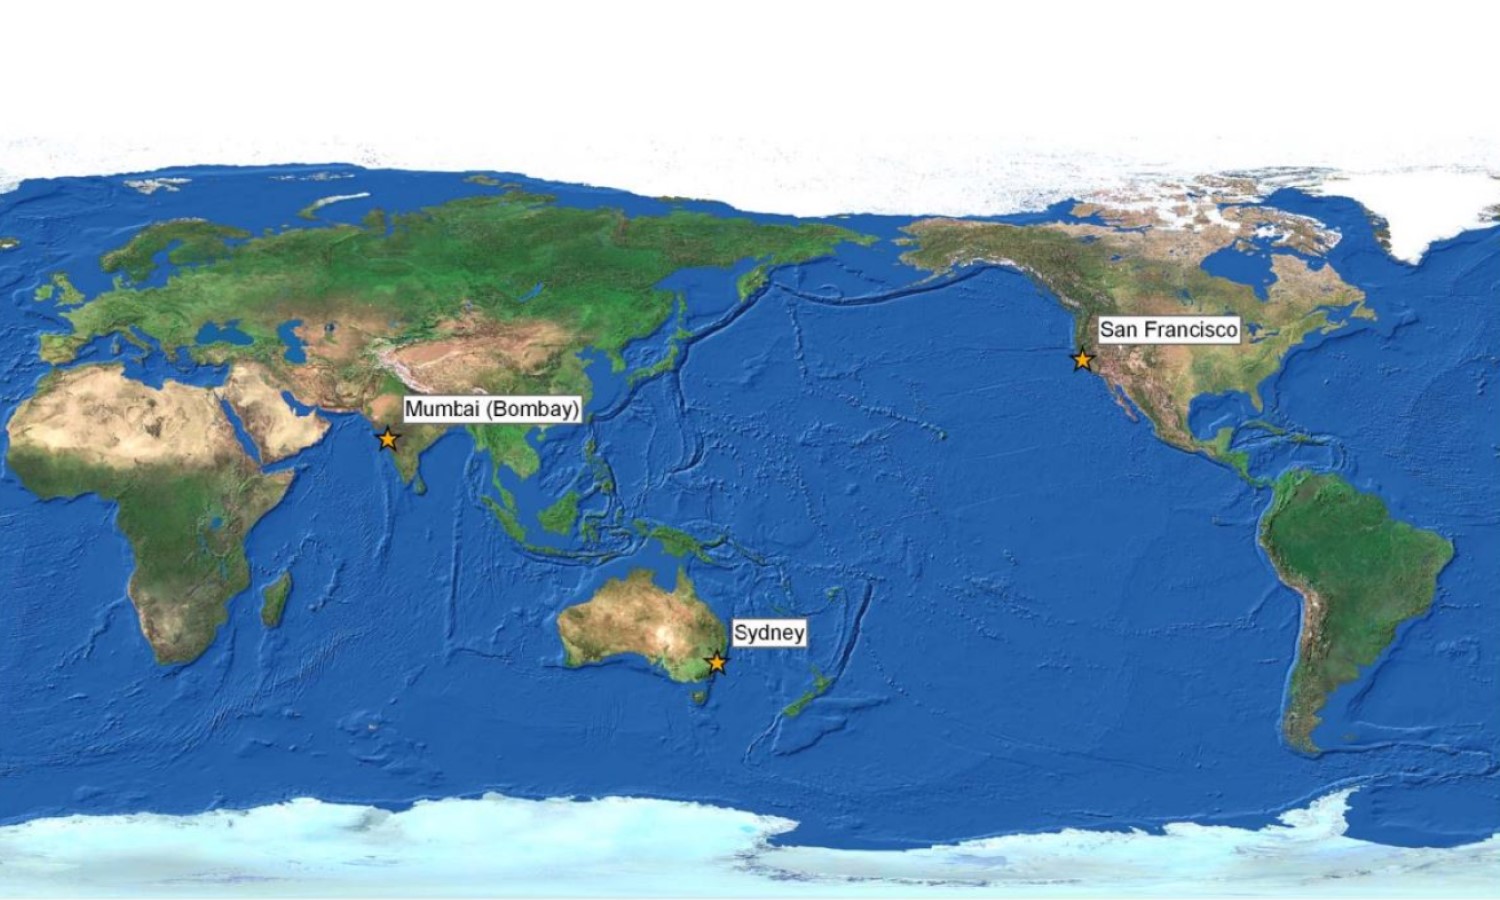 plate tectonics theory map